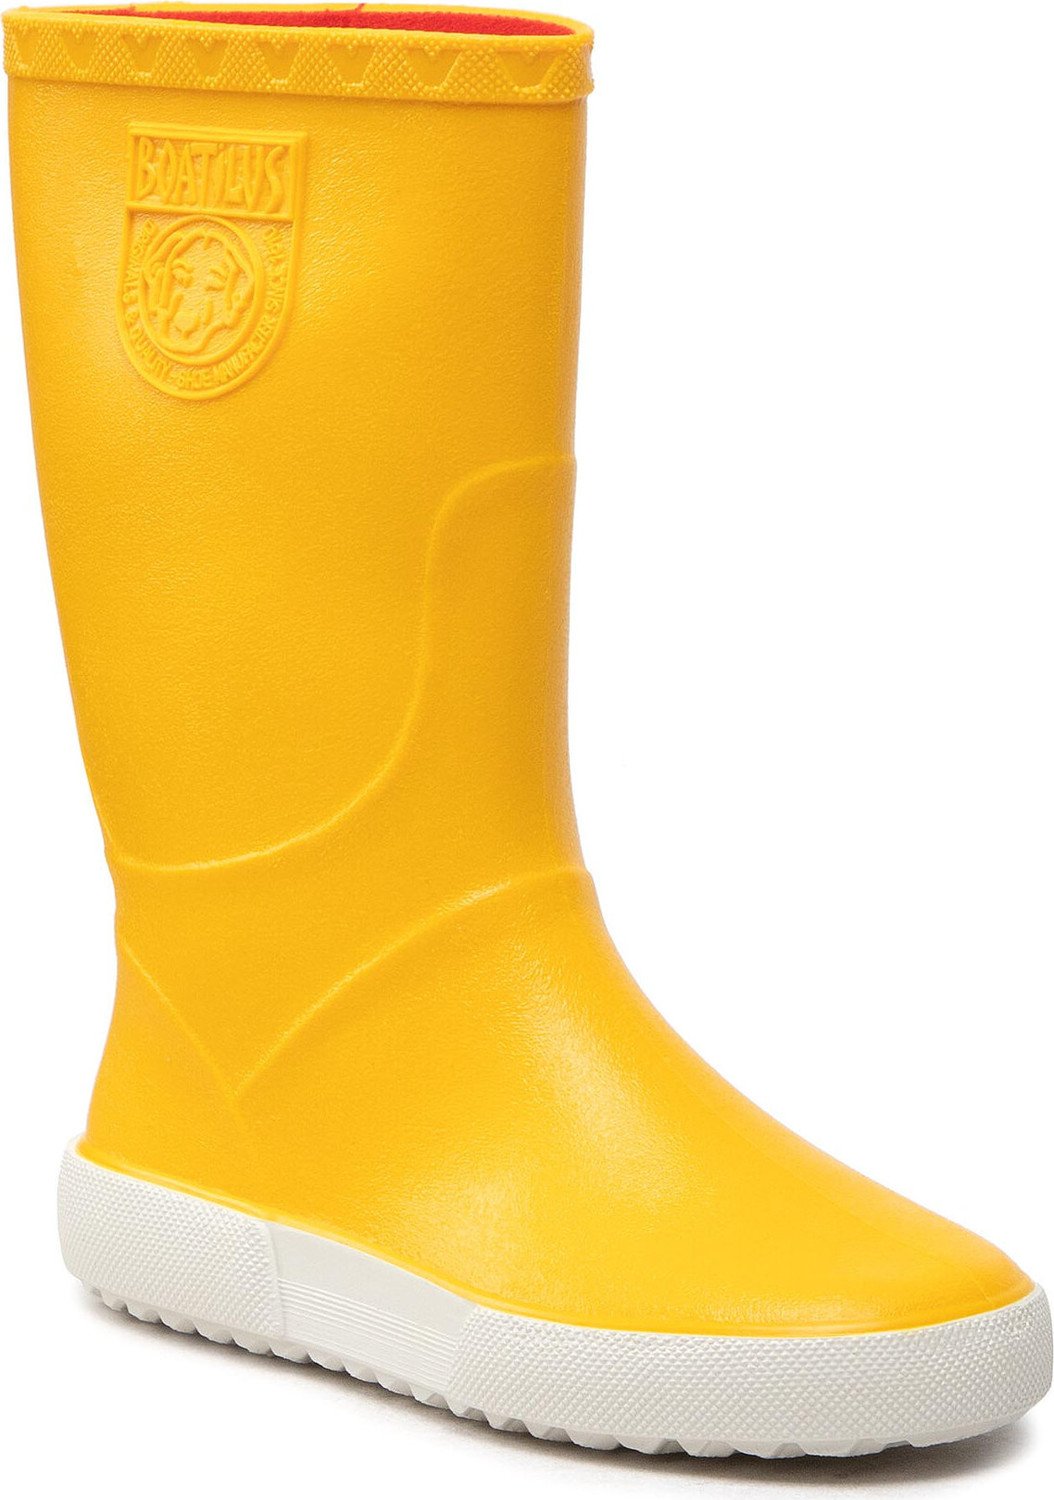 Holínky Boatilus Nautic Rain Boot VAR.03 Yellow/White